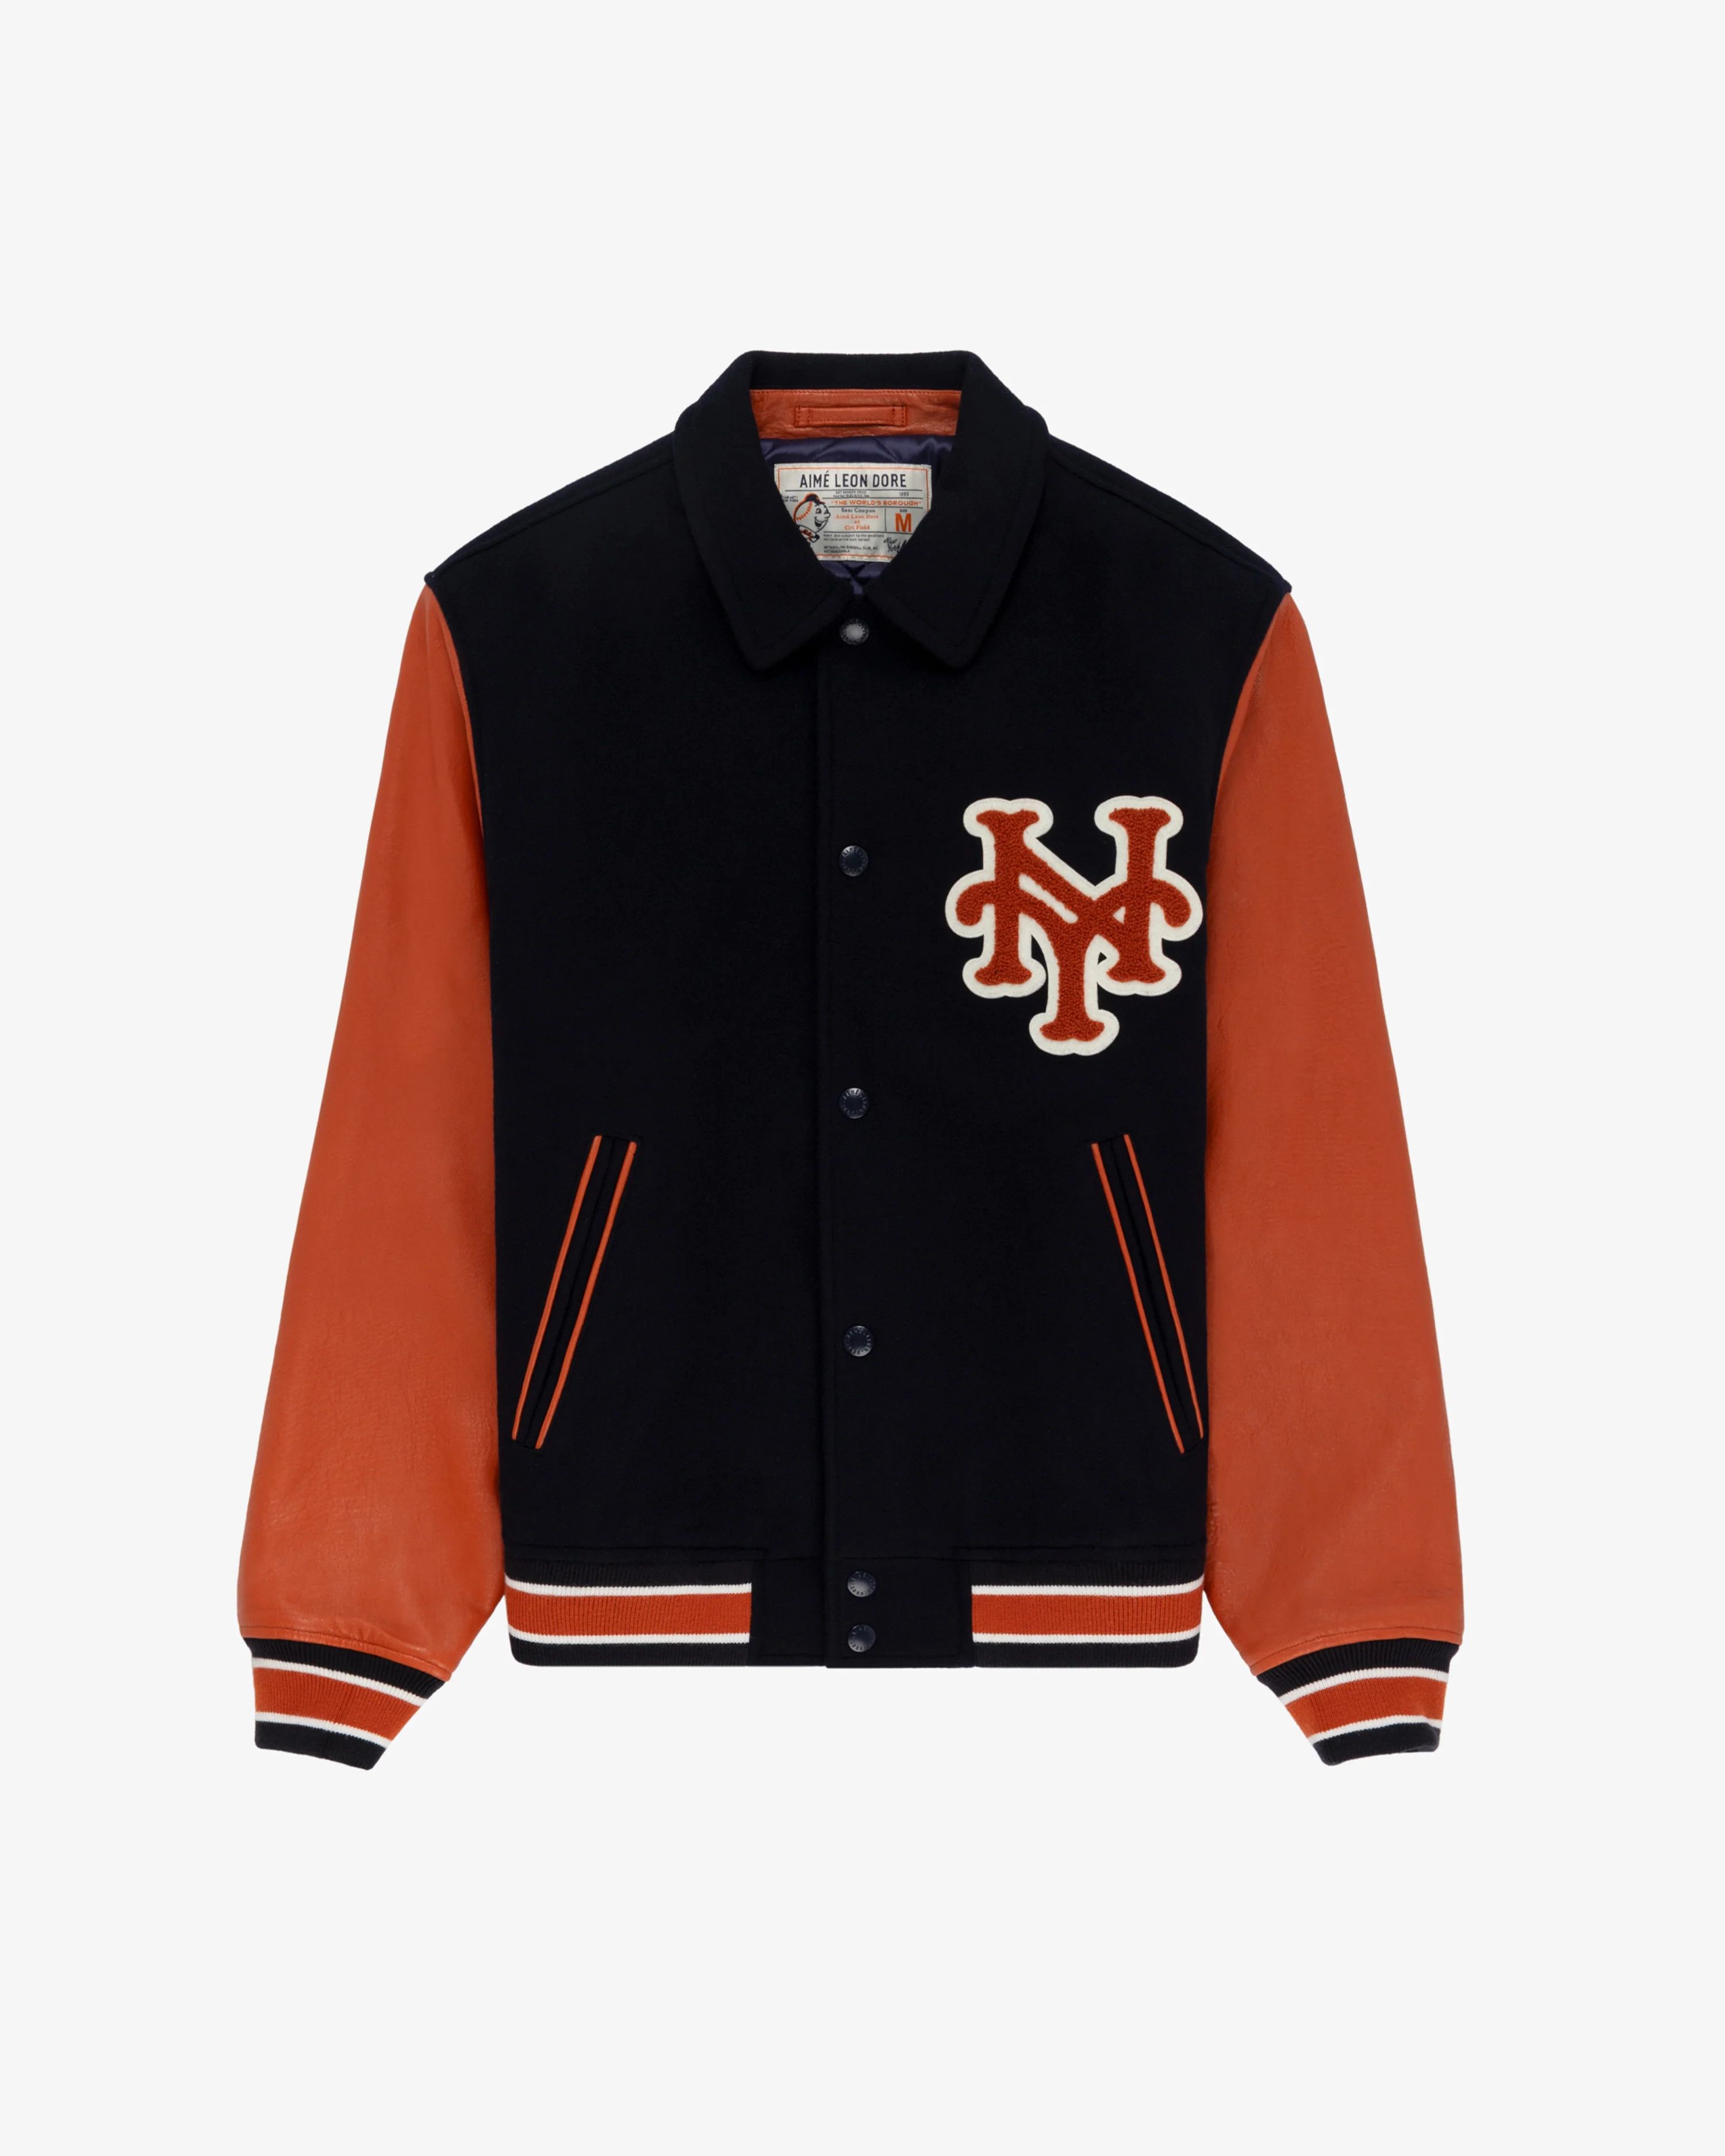 Aime Leon Dore ALD / New York Mets Varsity Jacket | Grailed